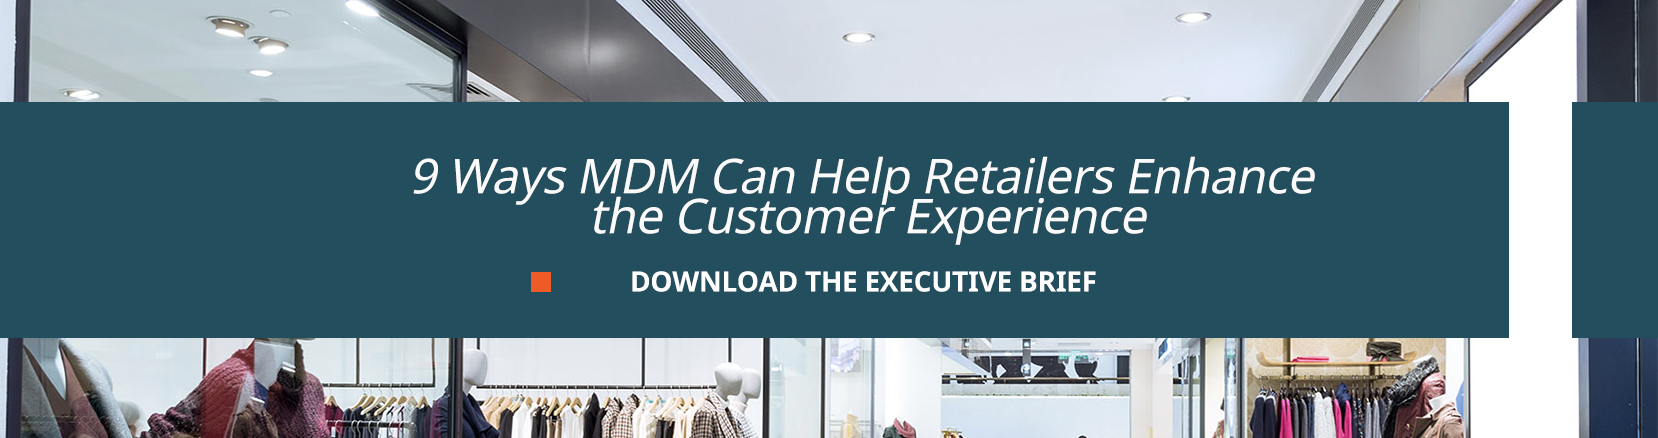 9 ways mdm can help retailers enhance the customer experience